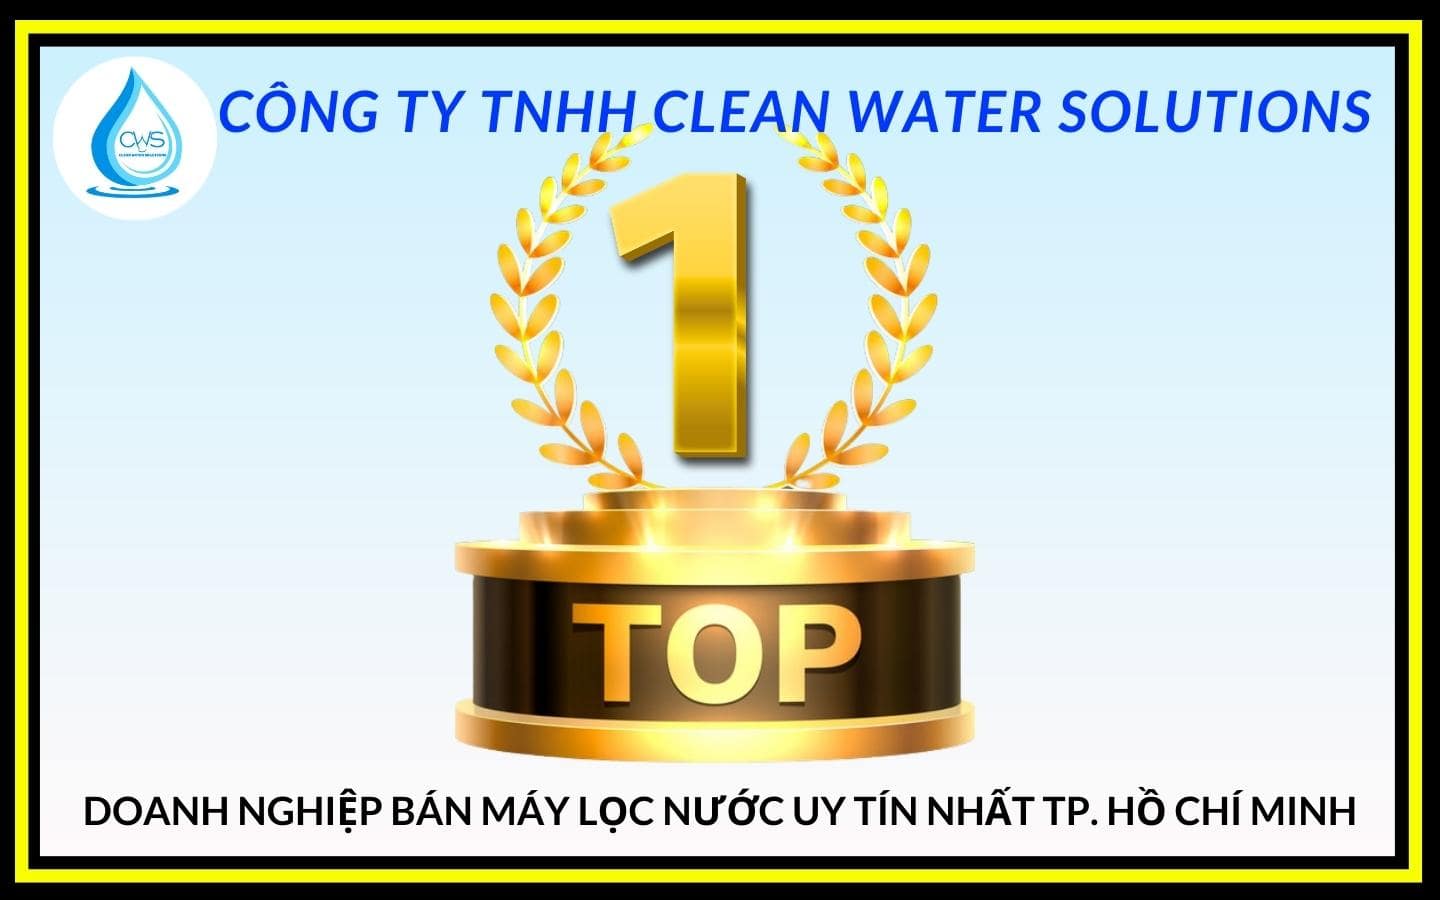 top-1-doanh-nghiep-may-loc-nuoc-uy-tin-ho-chi-minh